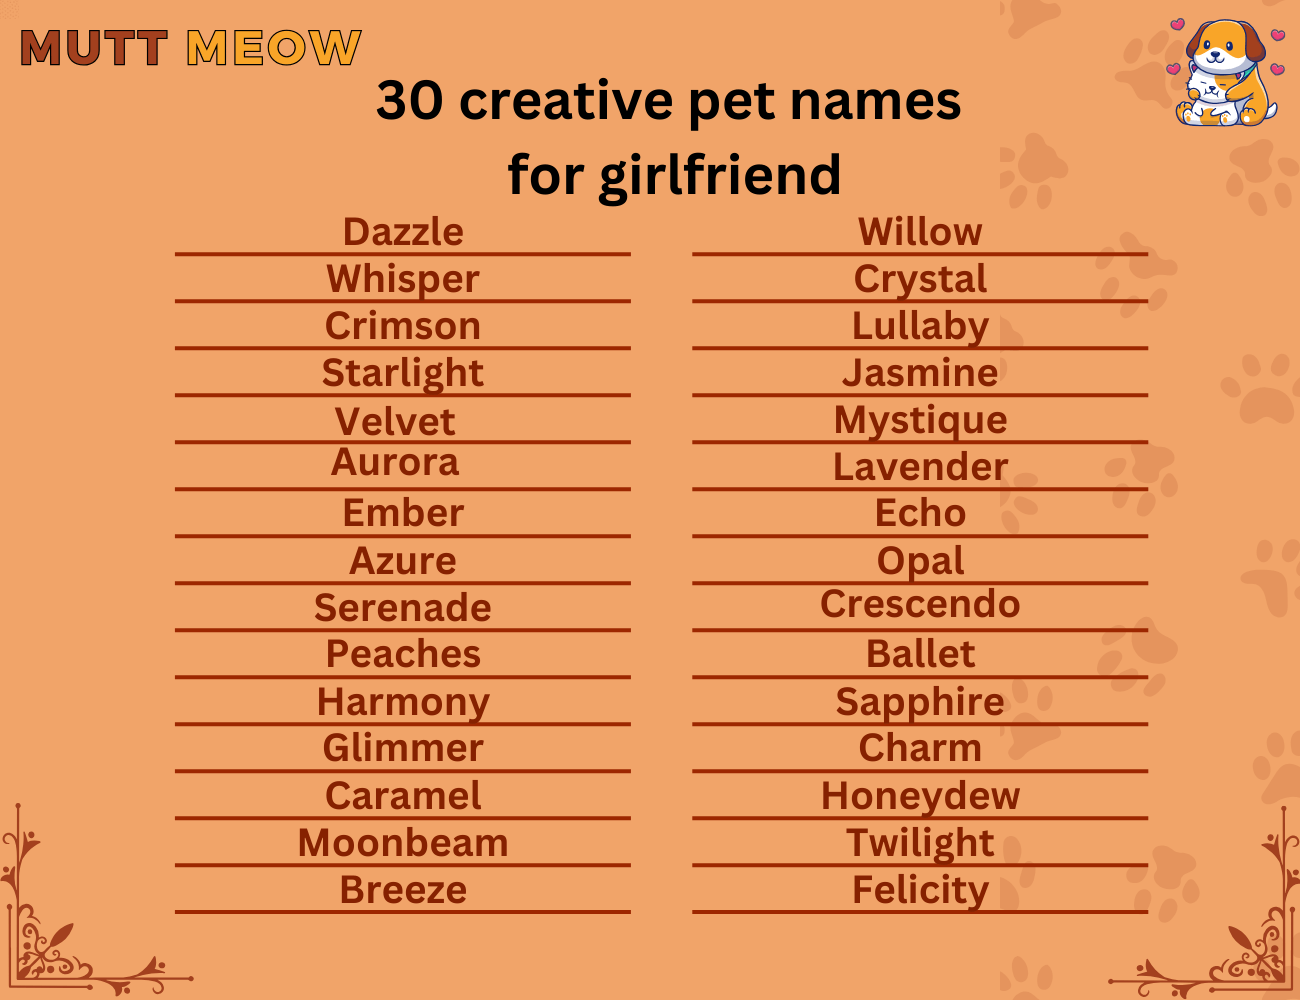 30 creative pet names for girlfriend